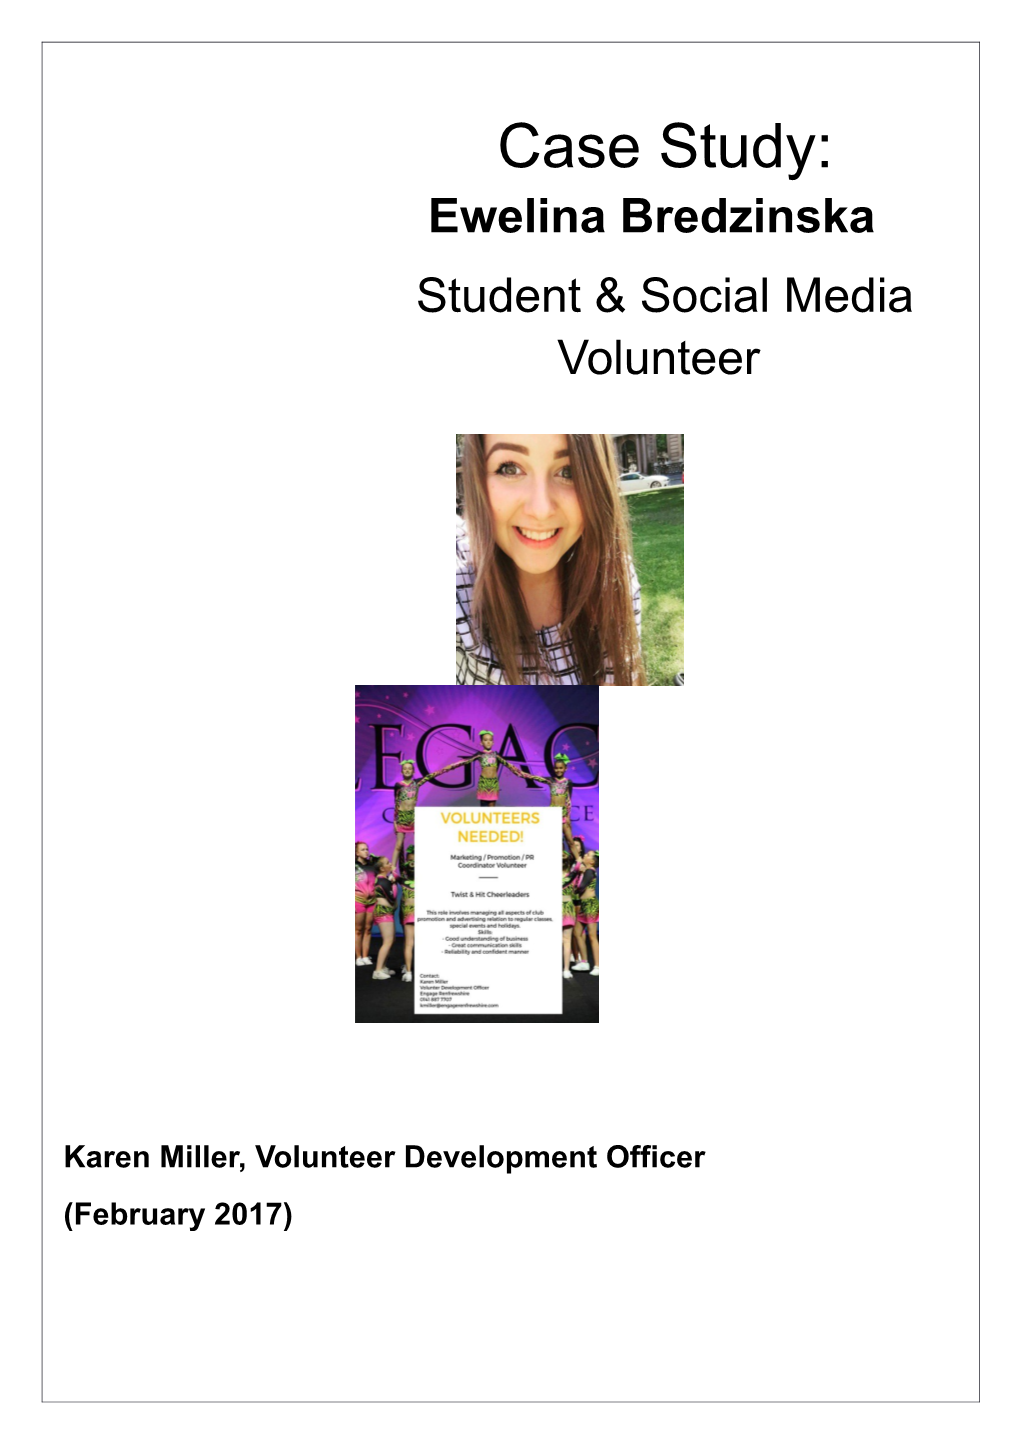 Karen Miller, Volunteer Development Officer